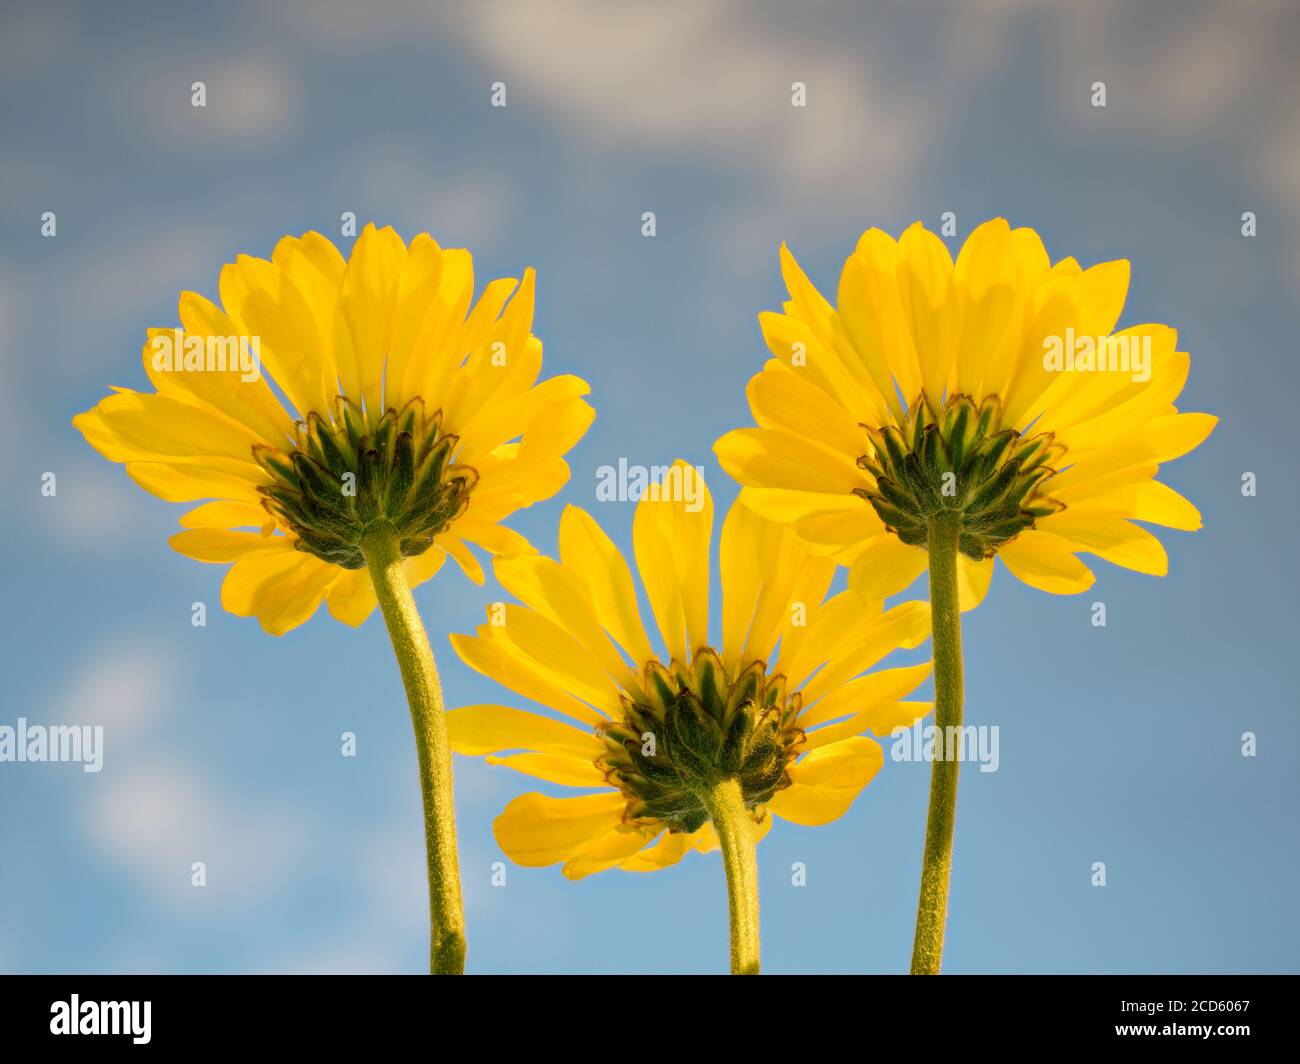 Group of three yellow daisy flowers Stock Photo